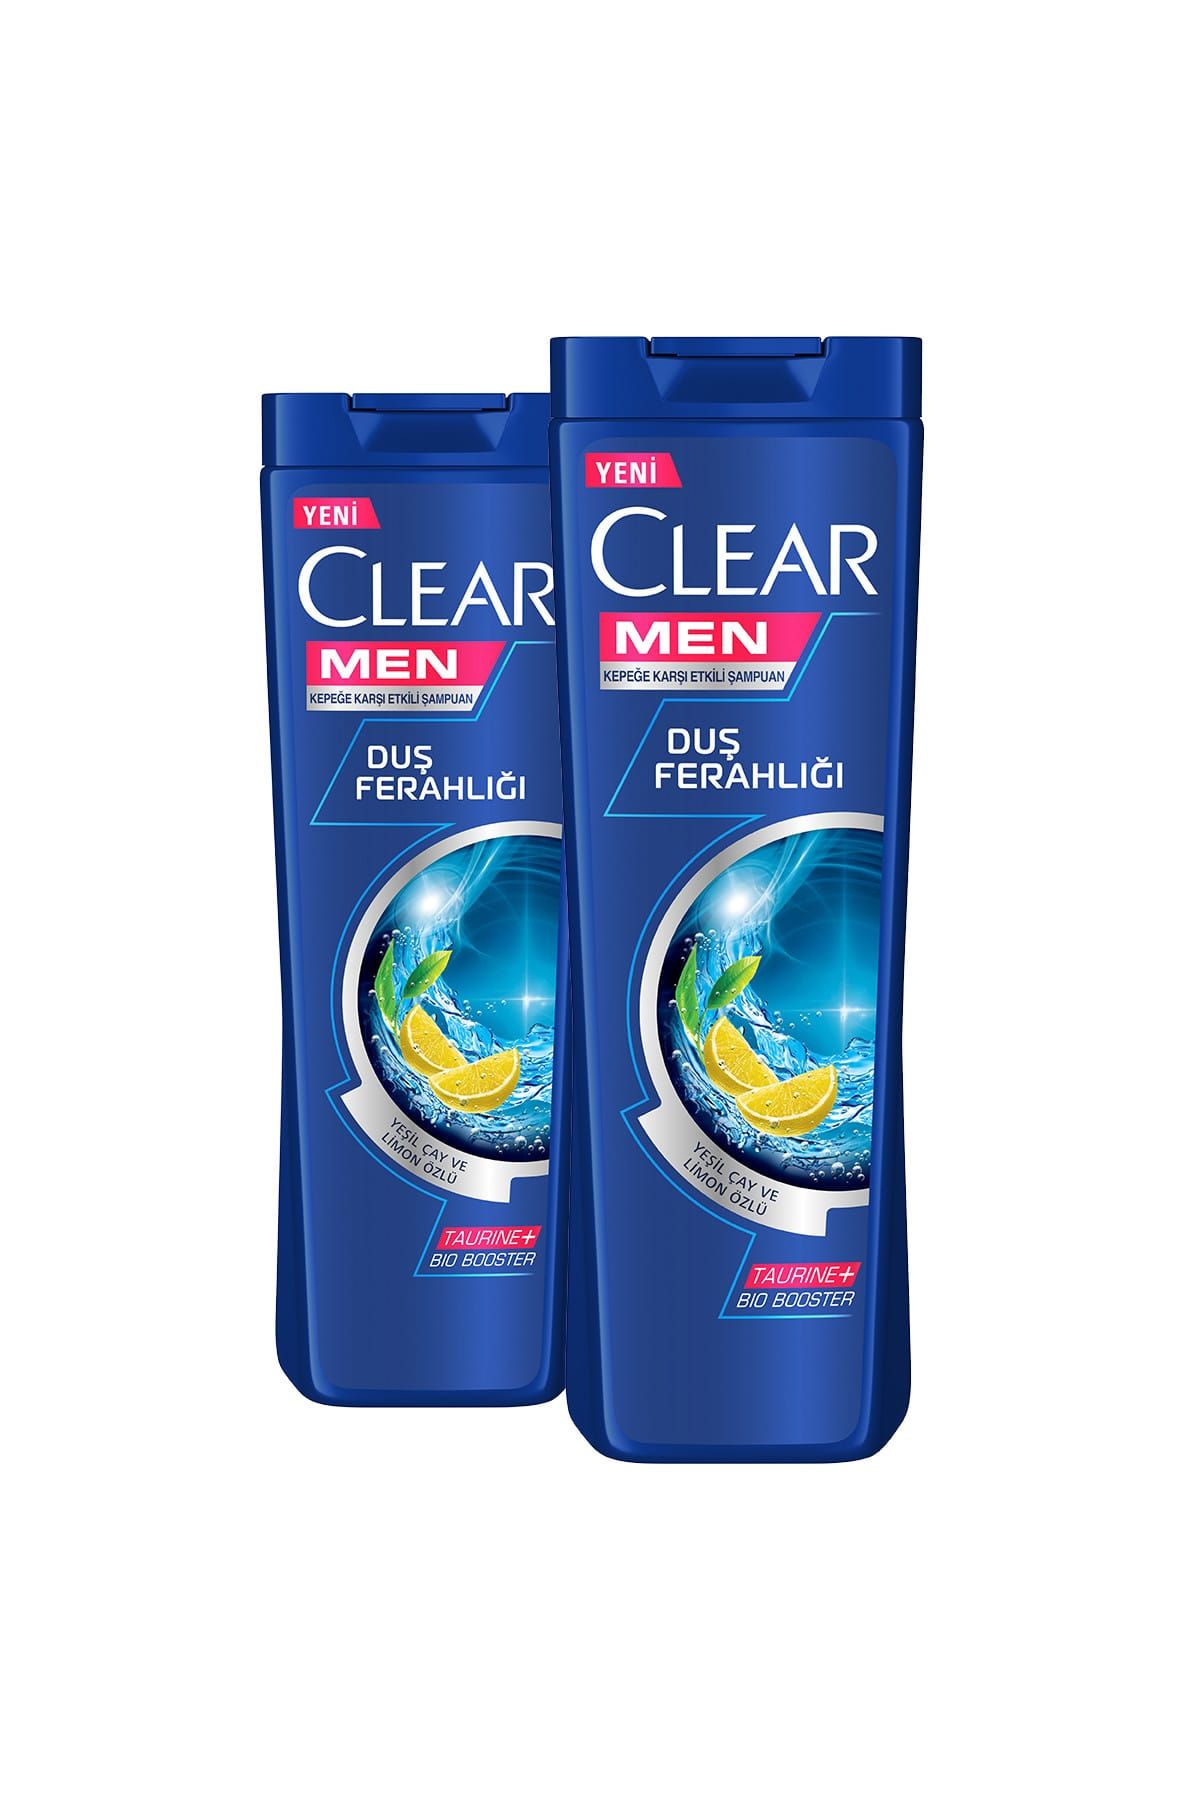 Clear Men Şampuan Duş Ferahlığı 500 ml x 2